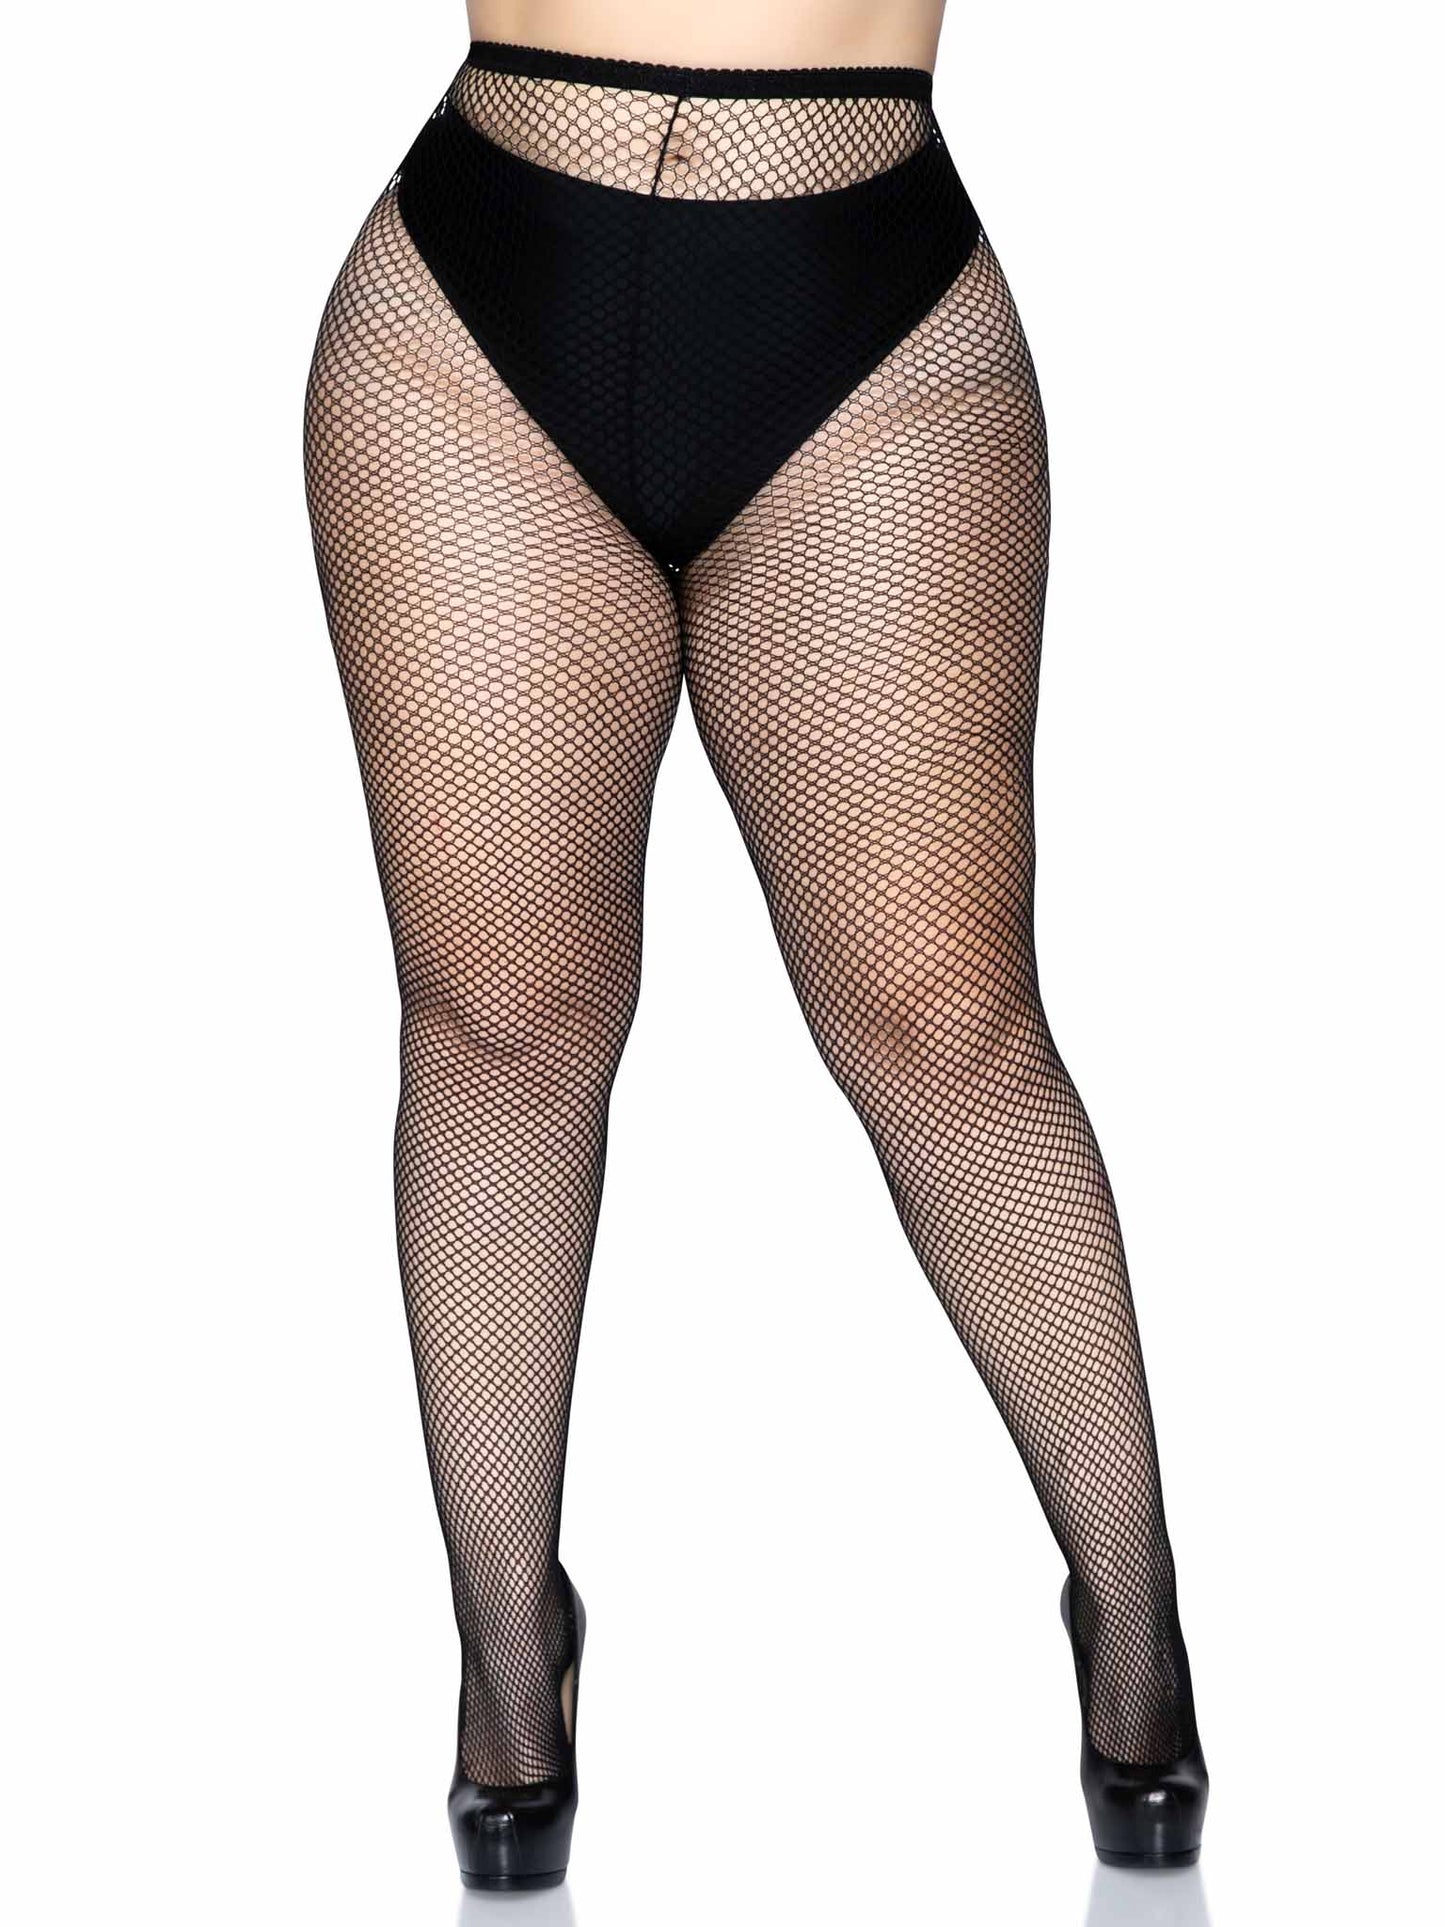 A model wearing the black plus size Spandex Fishnet Pantyhose .